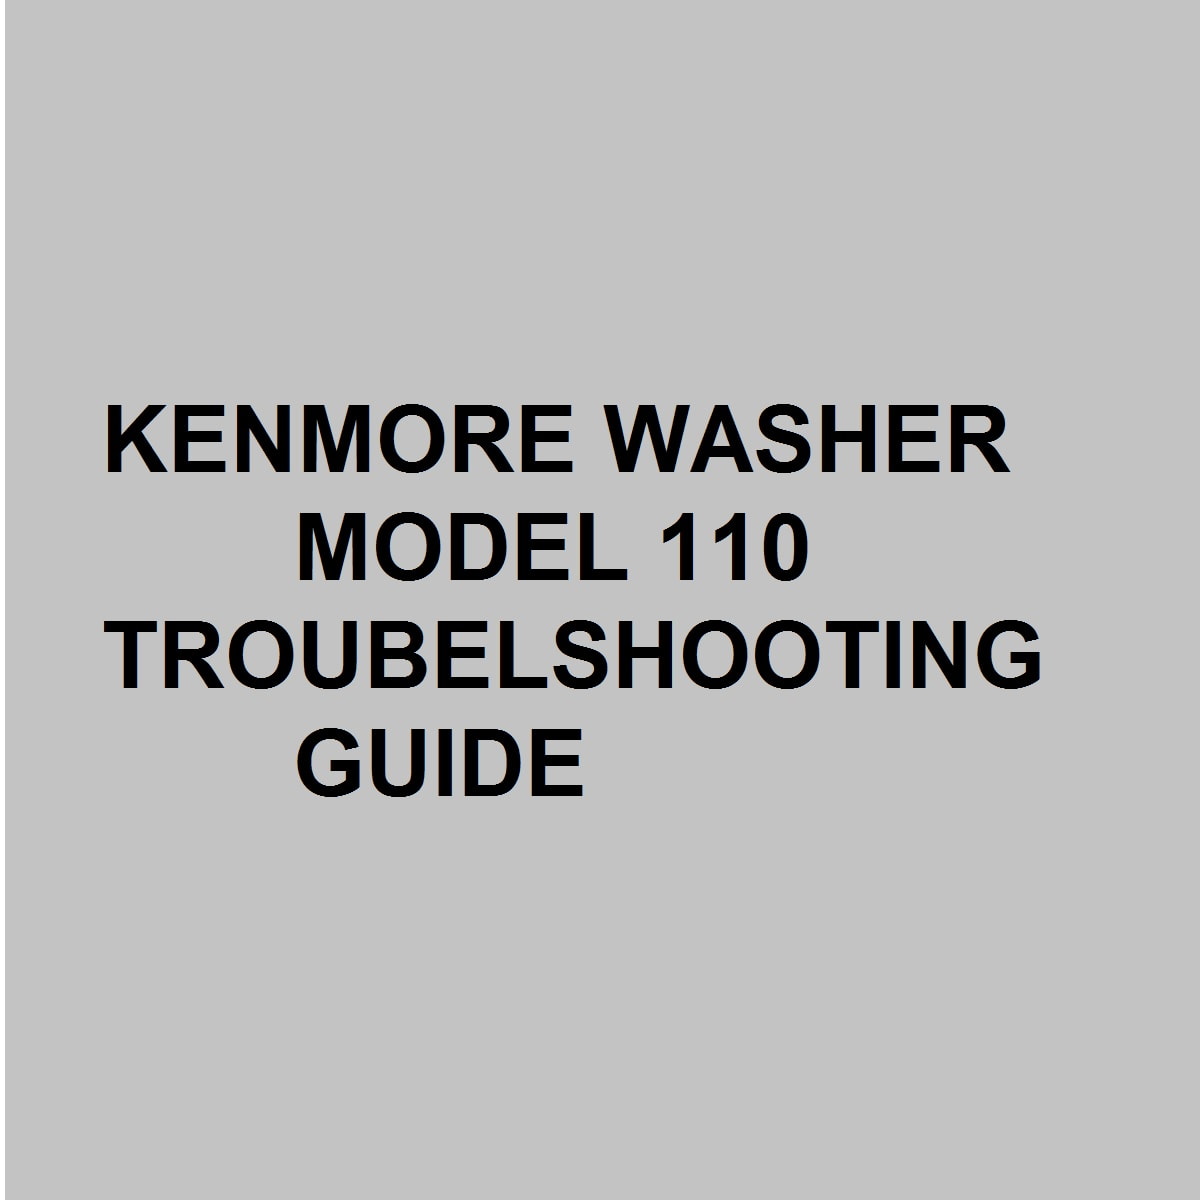 Kenmore washer model 110 troubleshooting